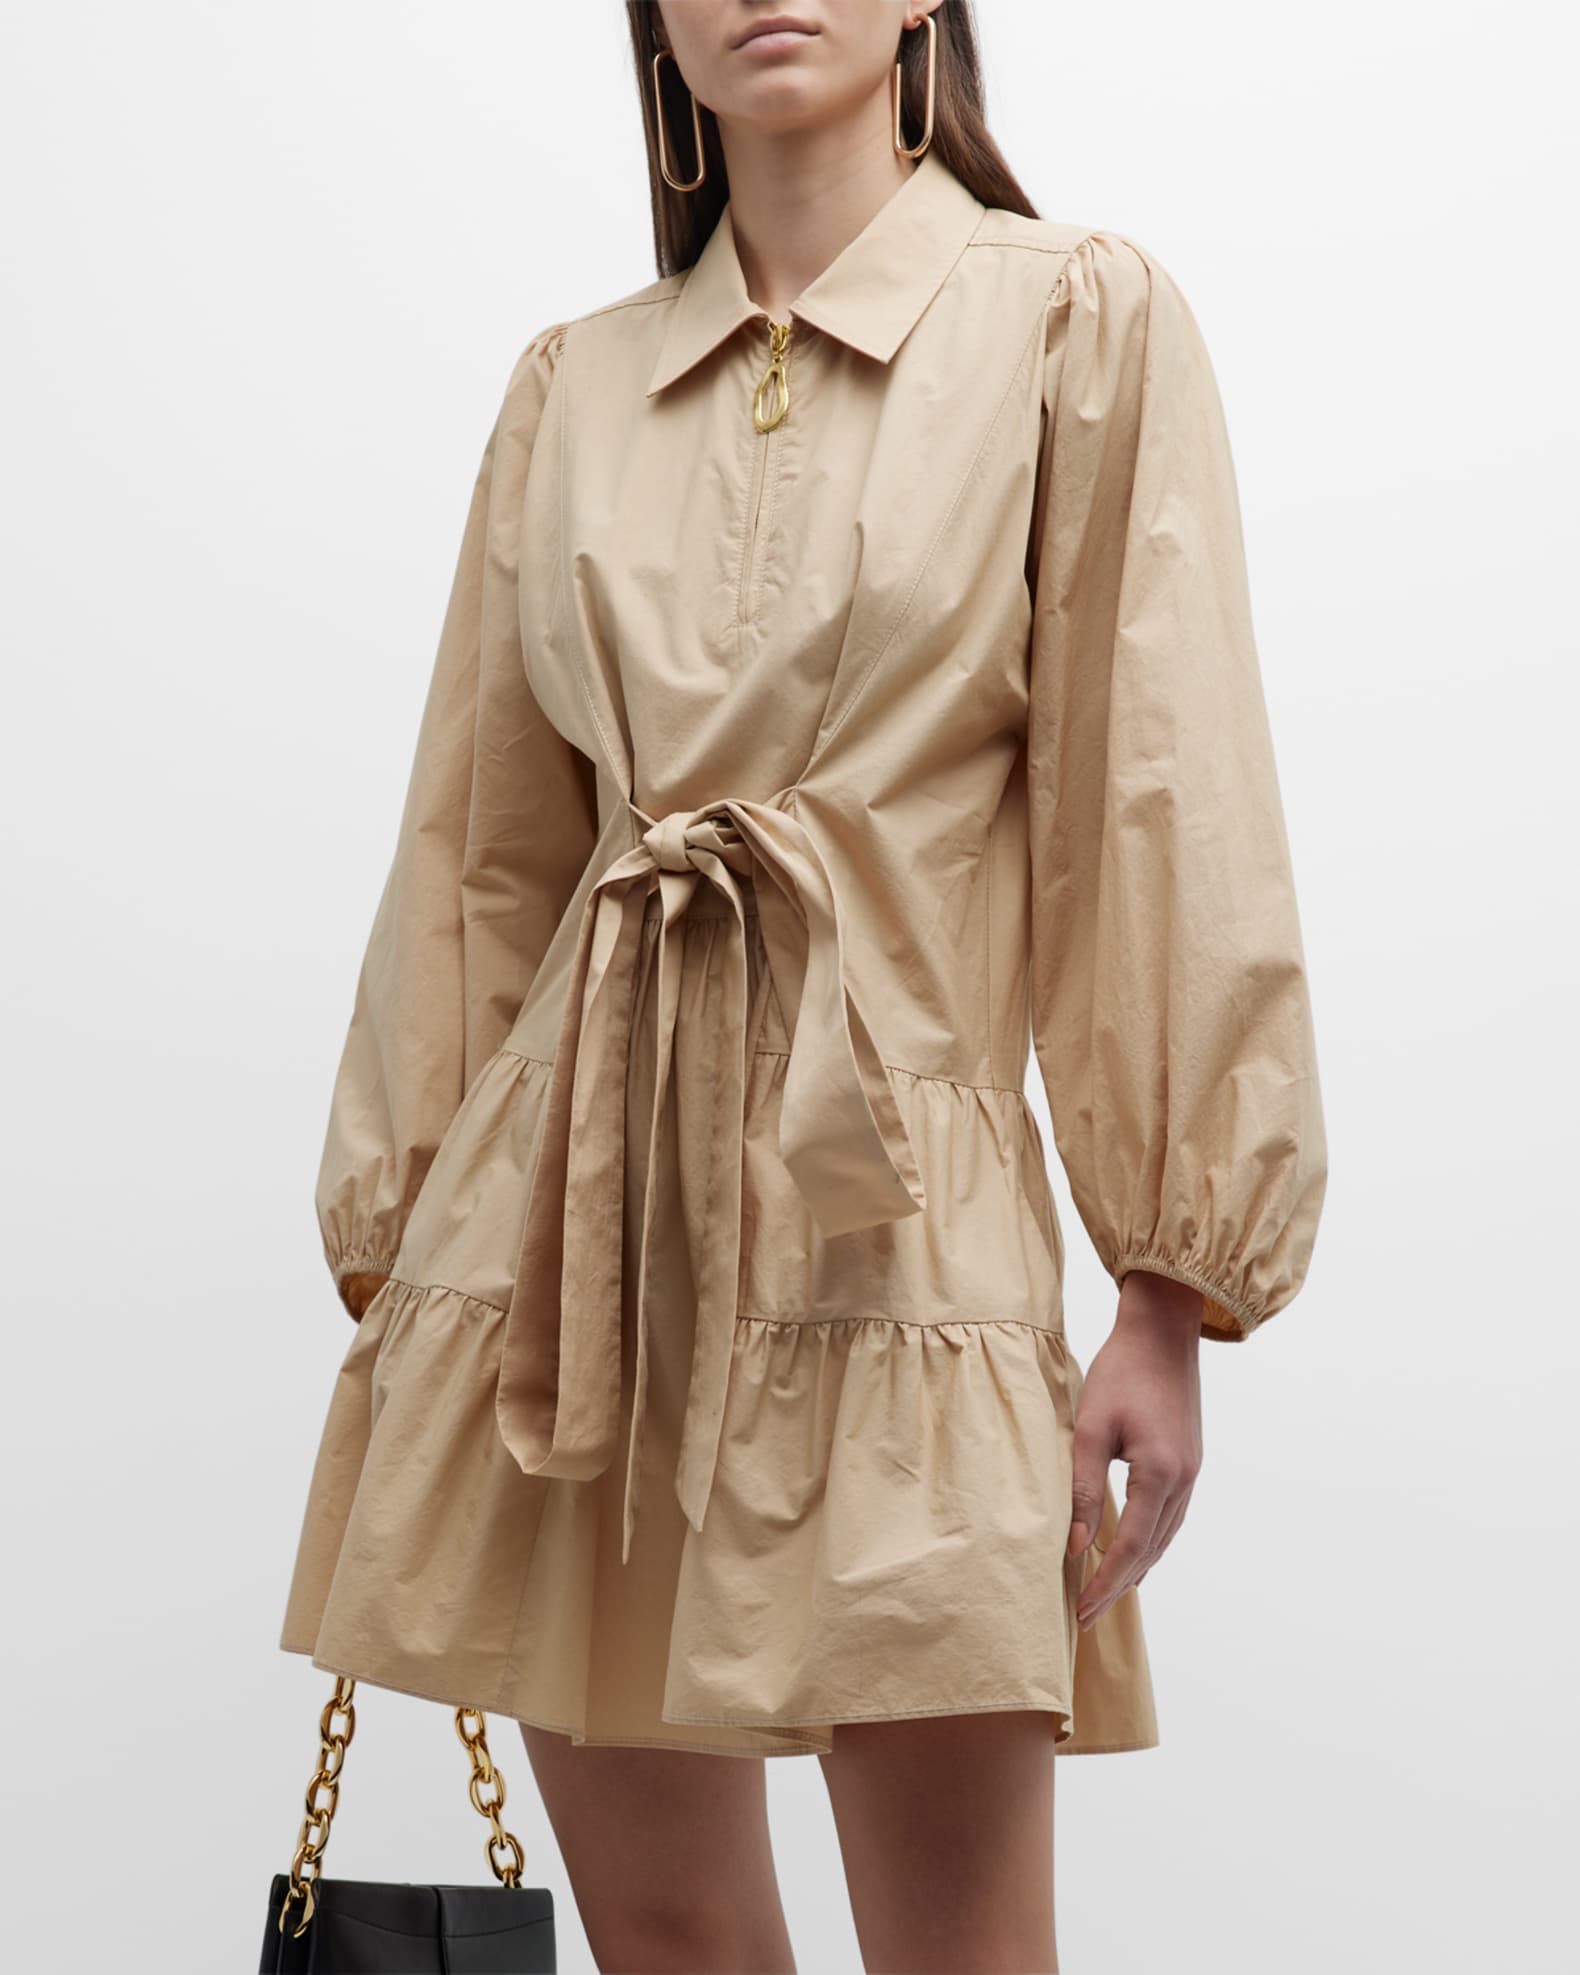 Tanya Taylor Kimberly Trapeze Front-Tie Mini Dress | Neiman Marcus